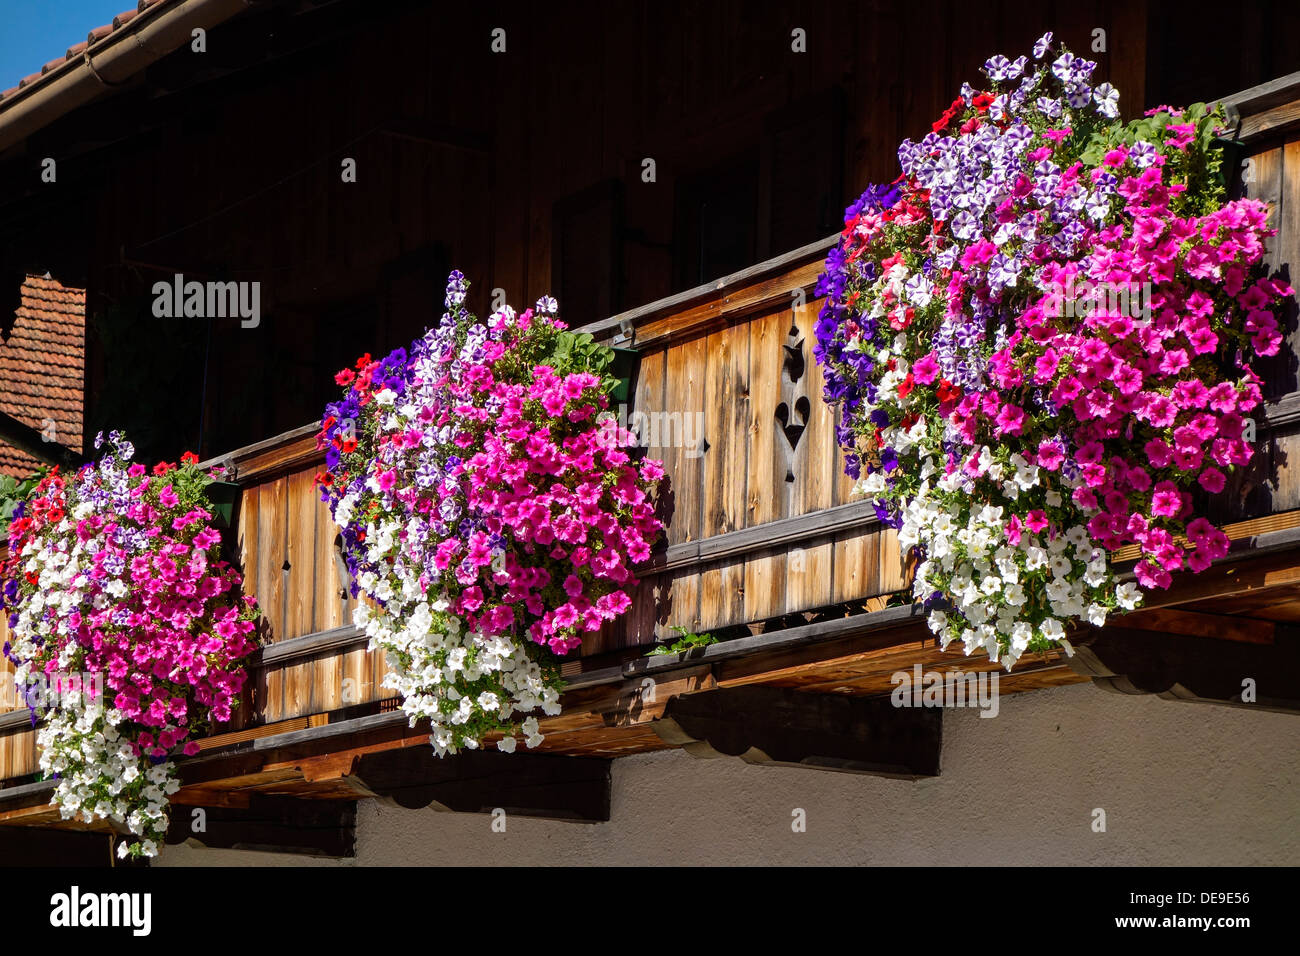 Kochel am See, Kochelsee, Balcon des fleurs sur une ferme, Berlin, Germany, Europe Banque D'Images